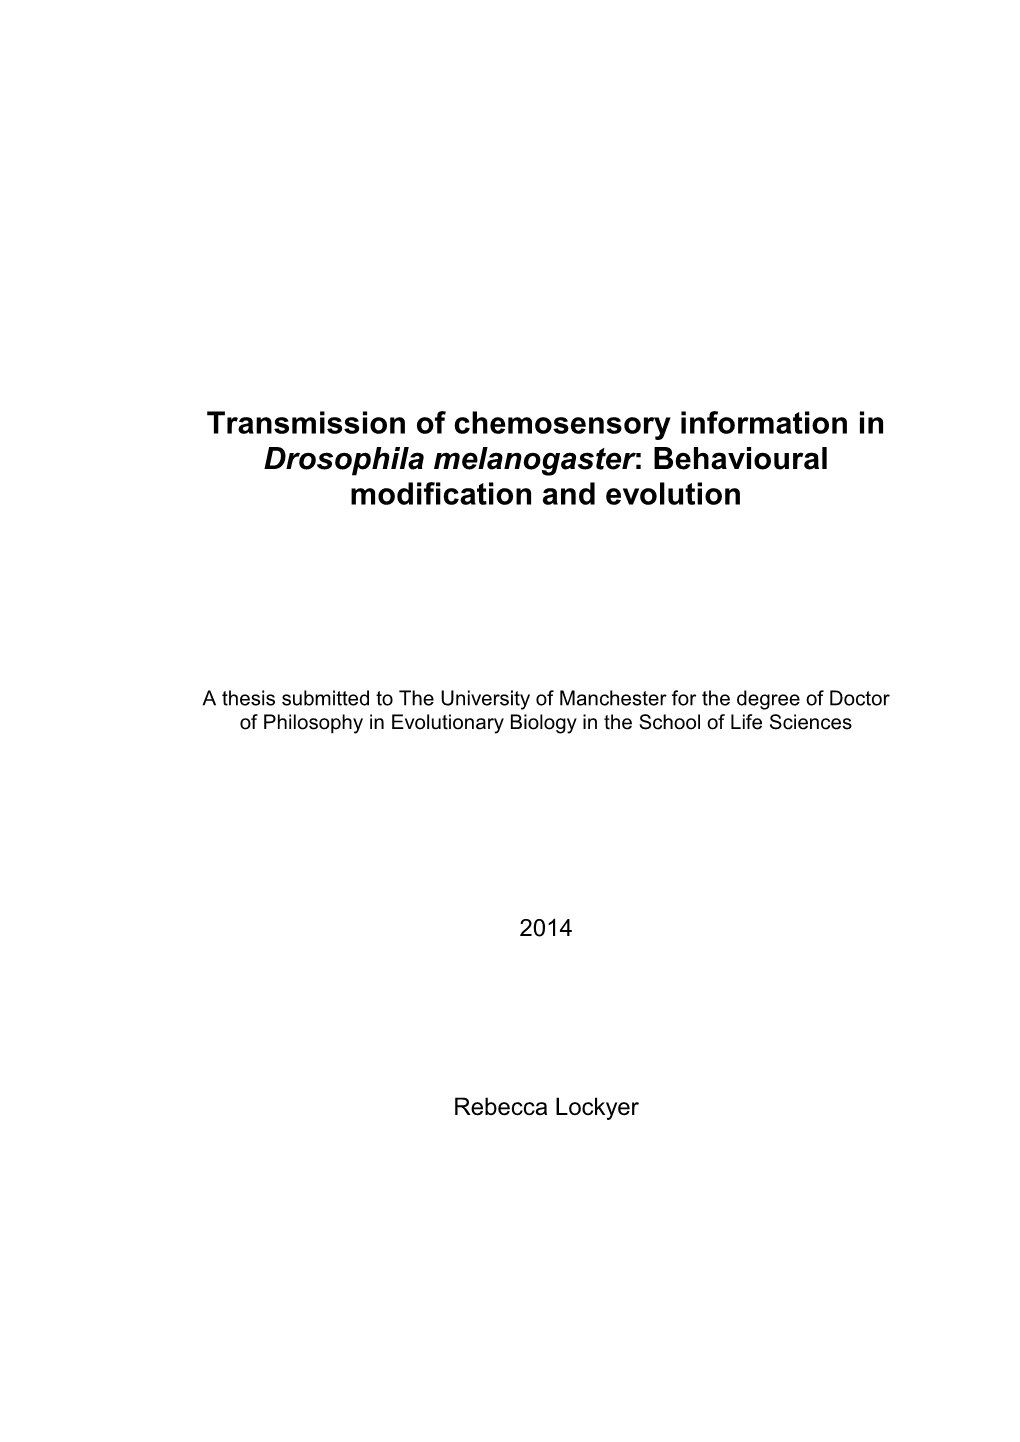 Transmission of Chemosensory Information in Drosophila Melanogaster: Behavioural Modification and Evolution